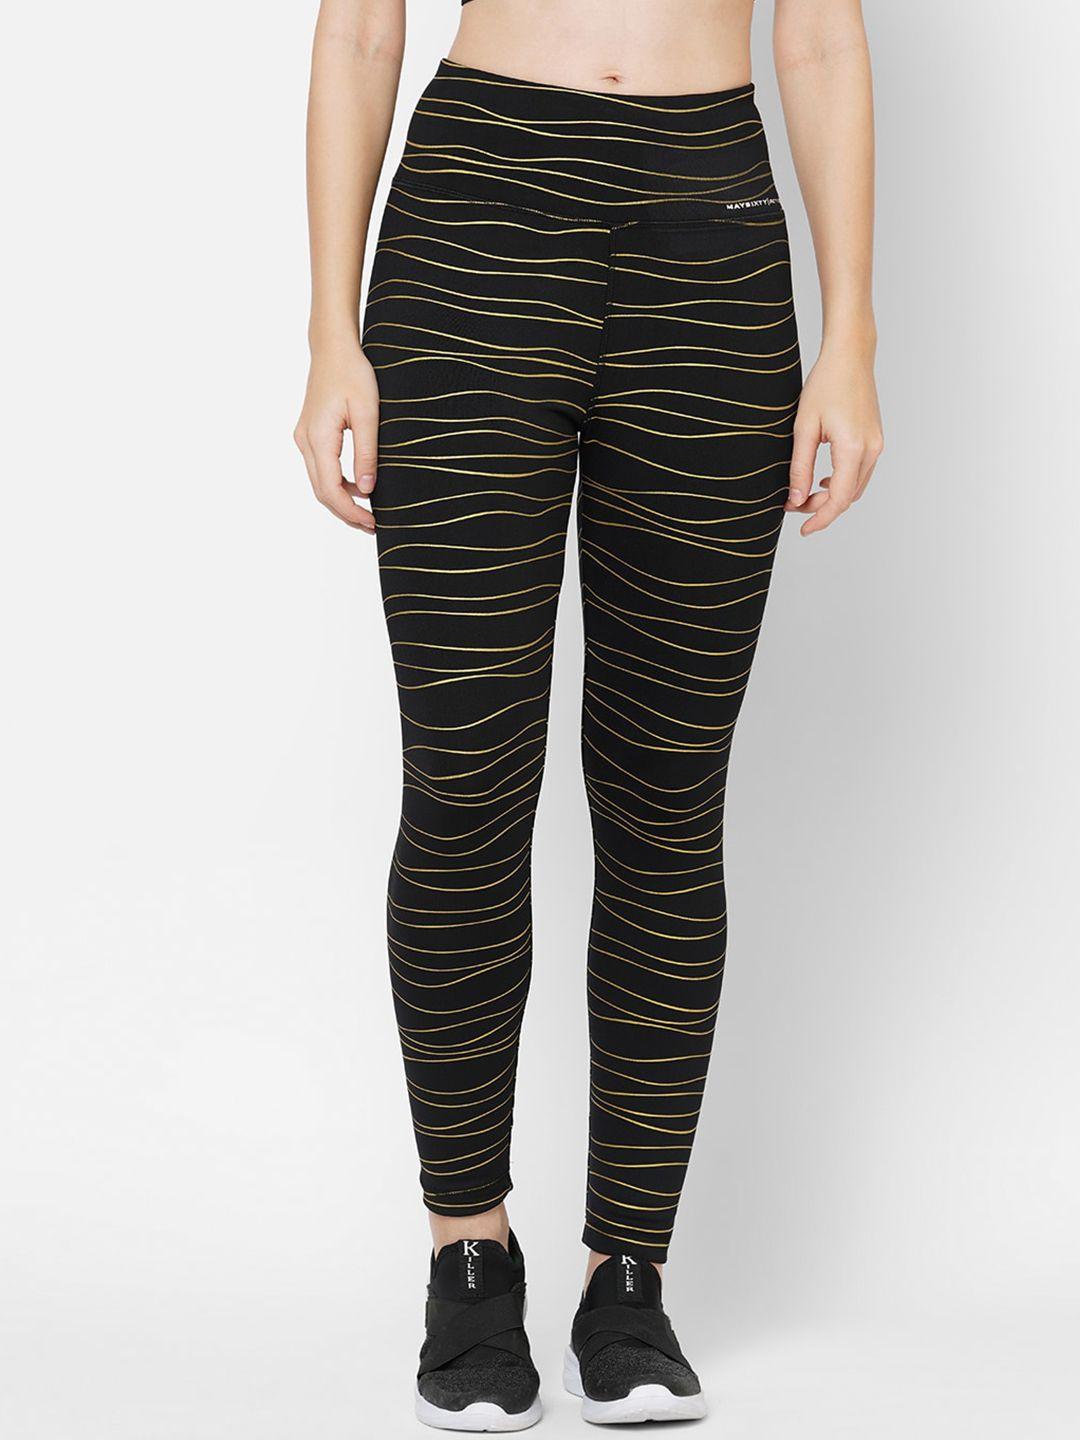 maysixty women black & yellow striped slim-fit track pants